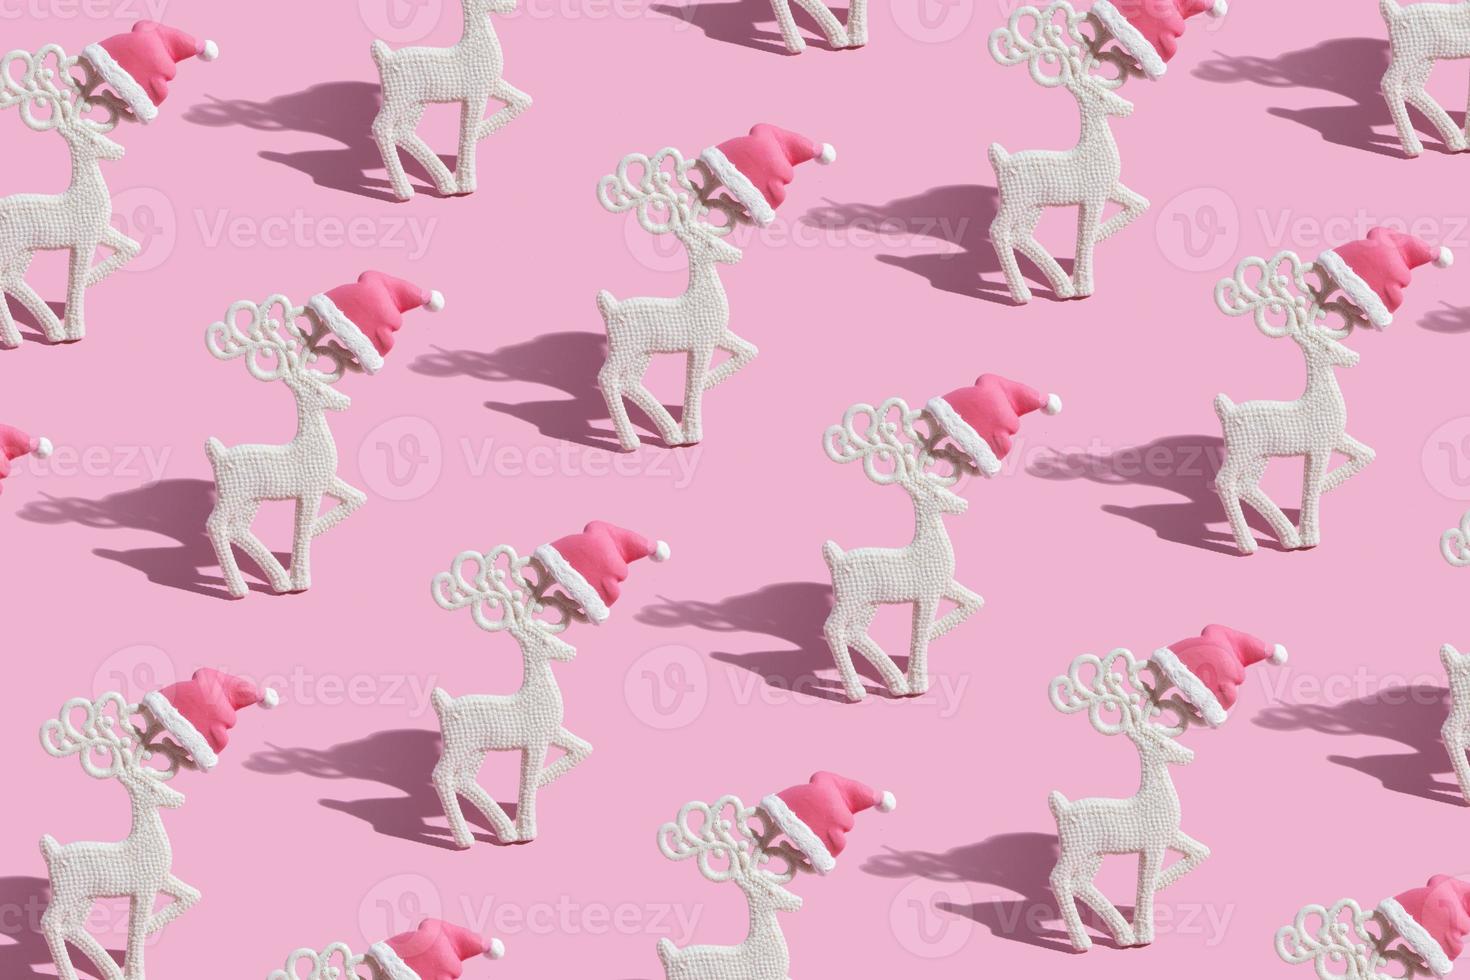 mönster med en glamorös ren i en tomtehatt på en rosa bakgrund foto